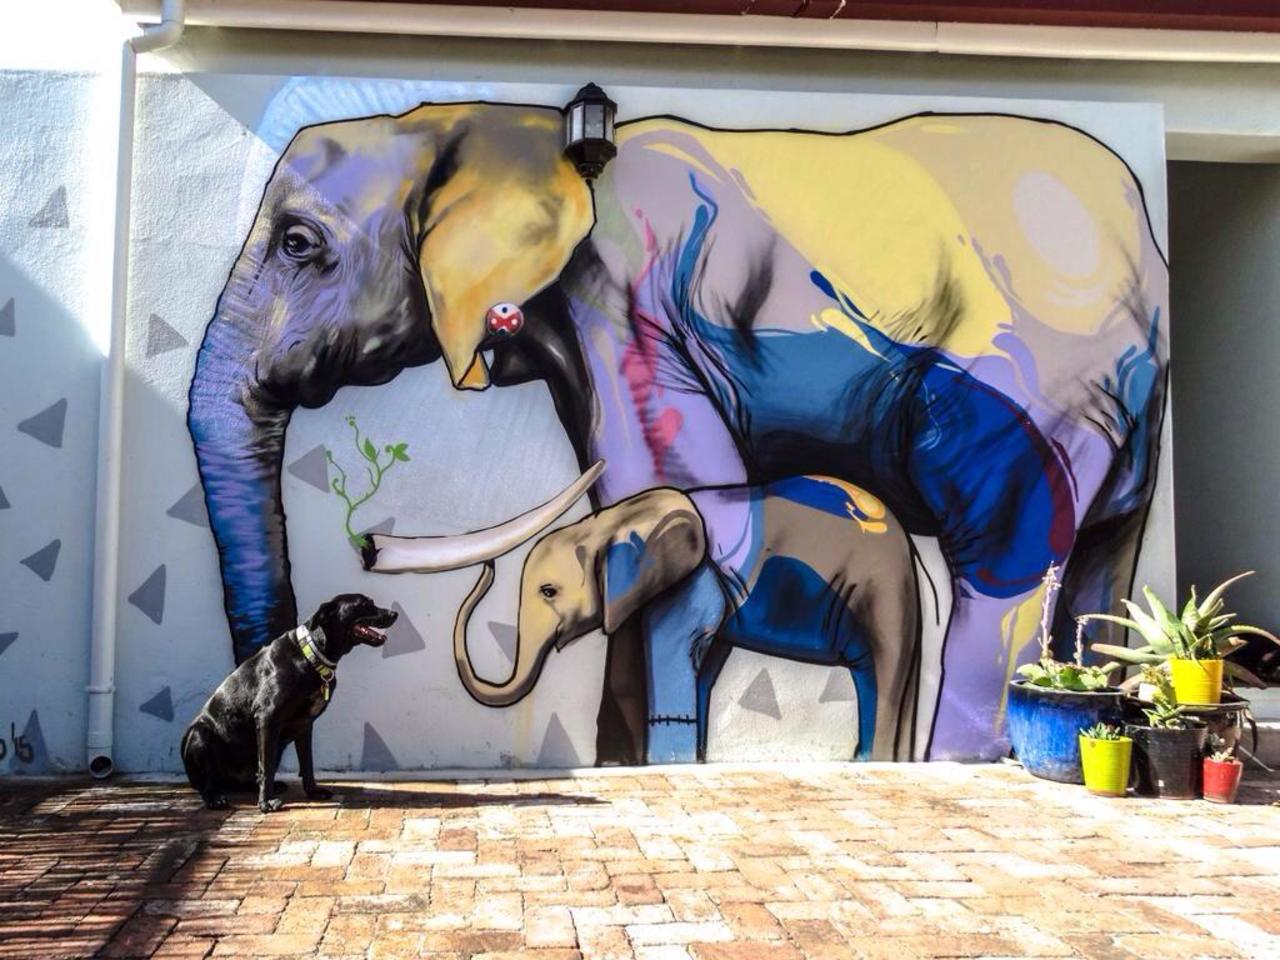 Latest nature in Street Art piece by Falko Paints In Cape Town

#art #mural #graffiti #streetart http://t.co/tkLvsJwl0Q